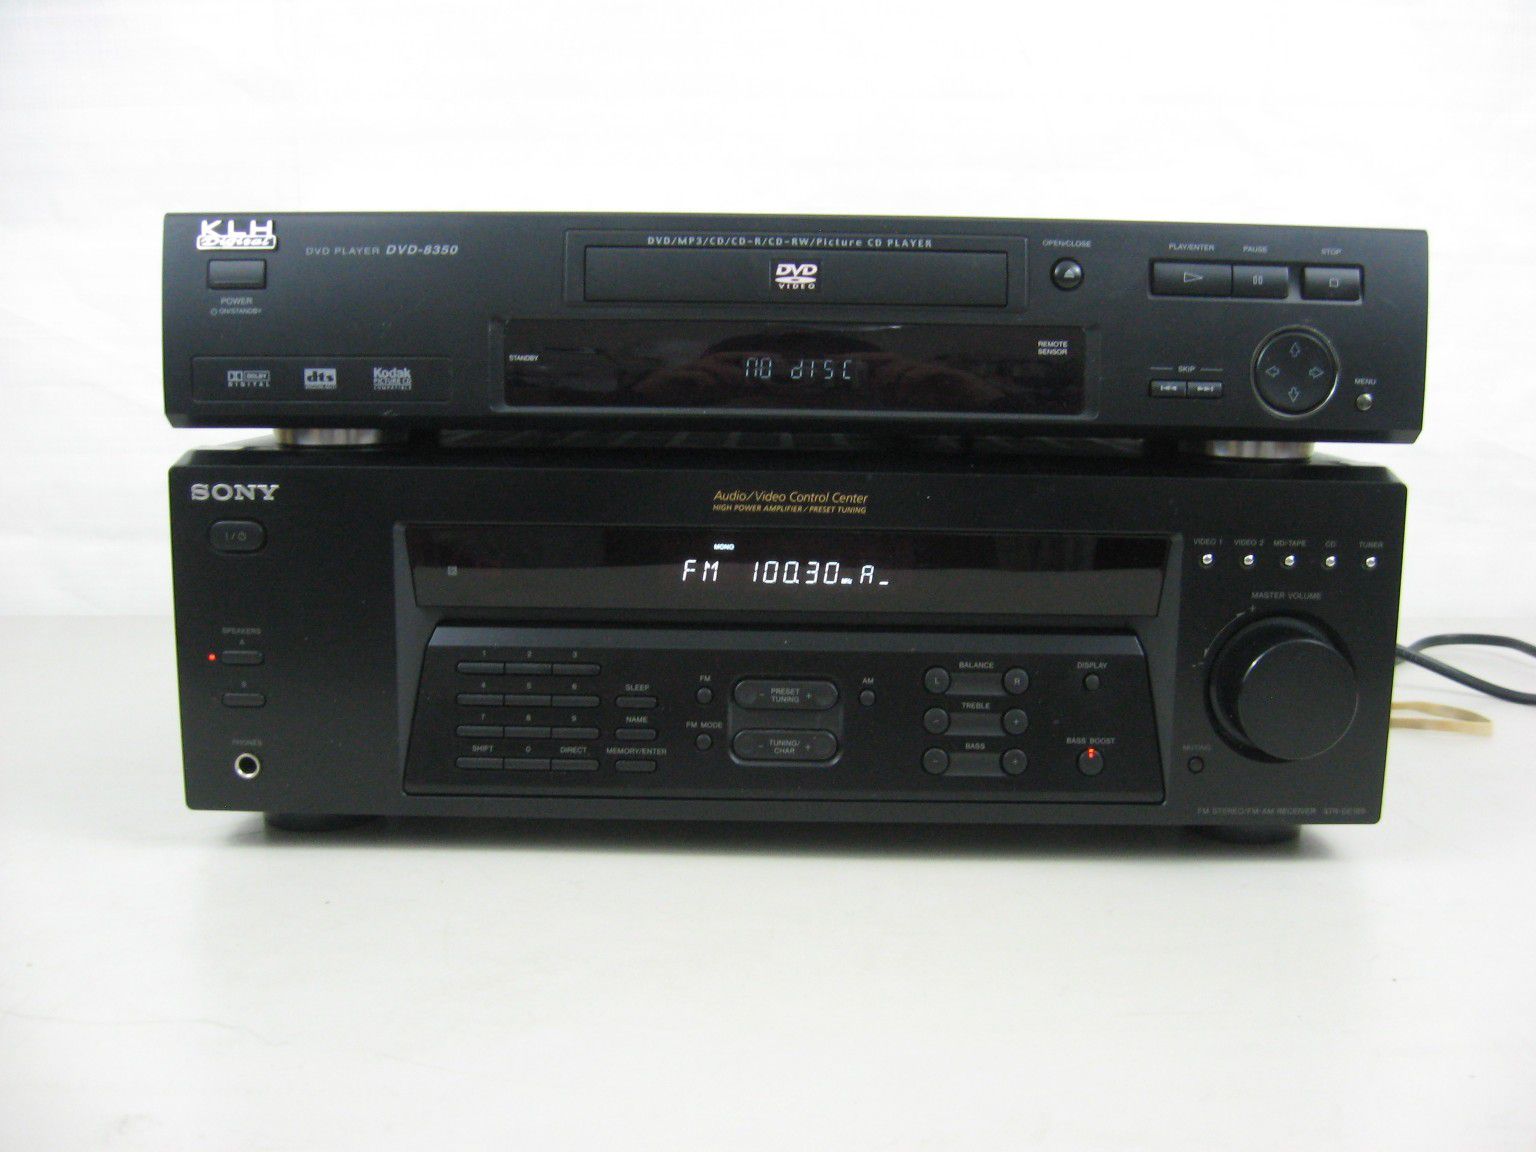 Sony Receiver Str-DE185 & KLH DVD/CD Player DVD-8350